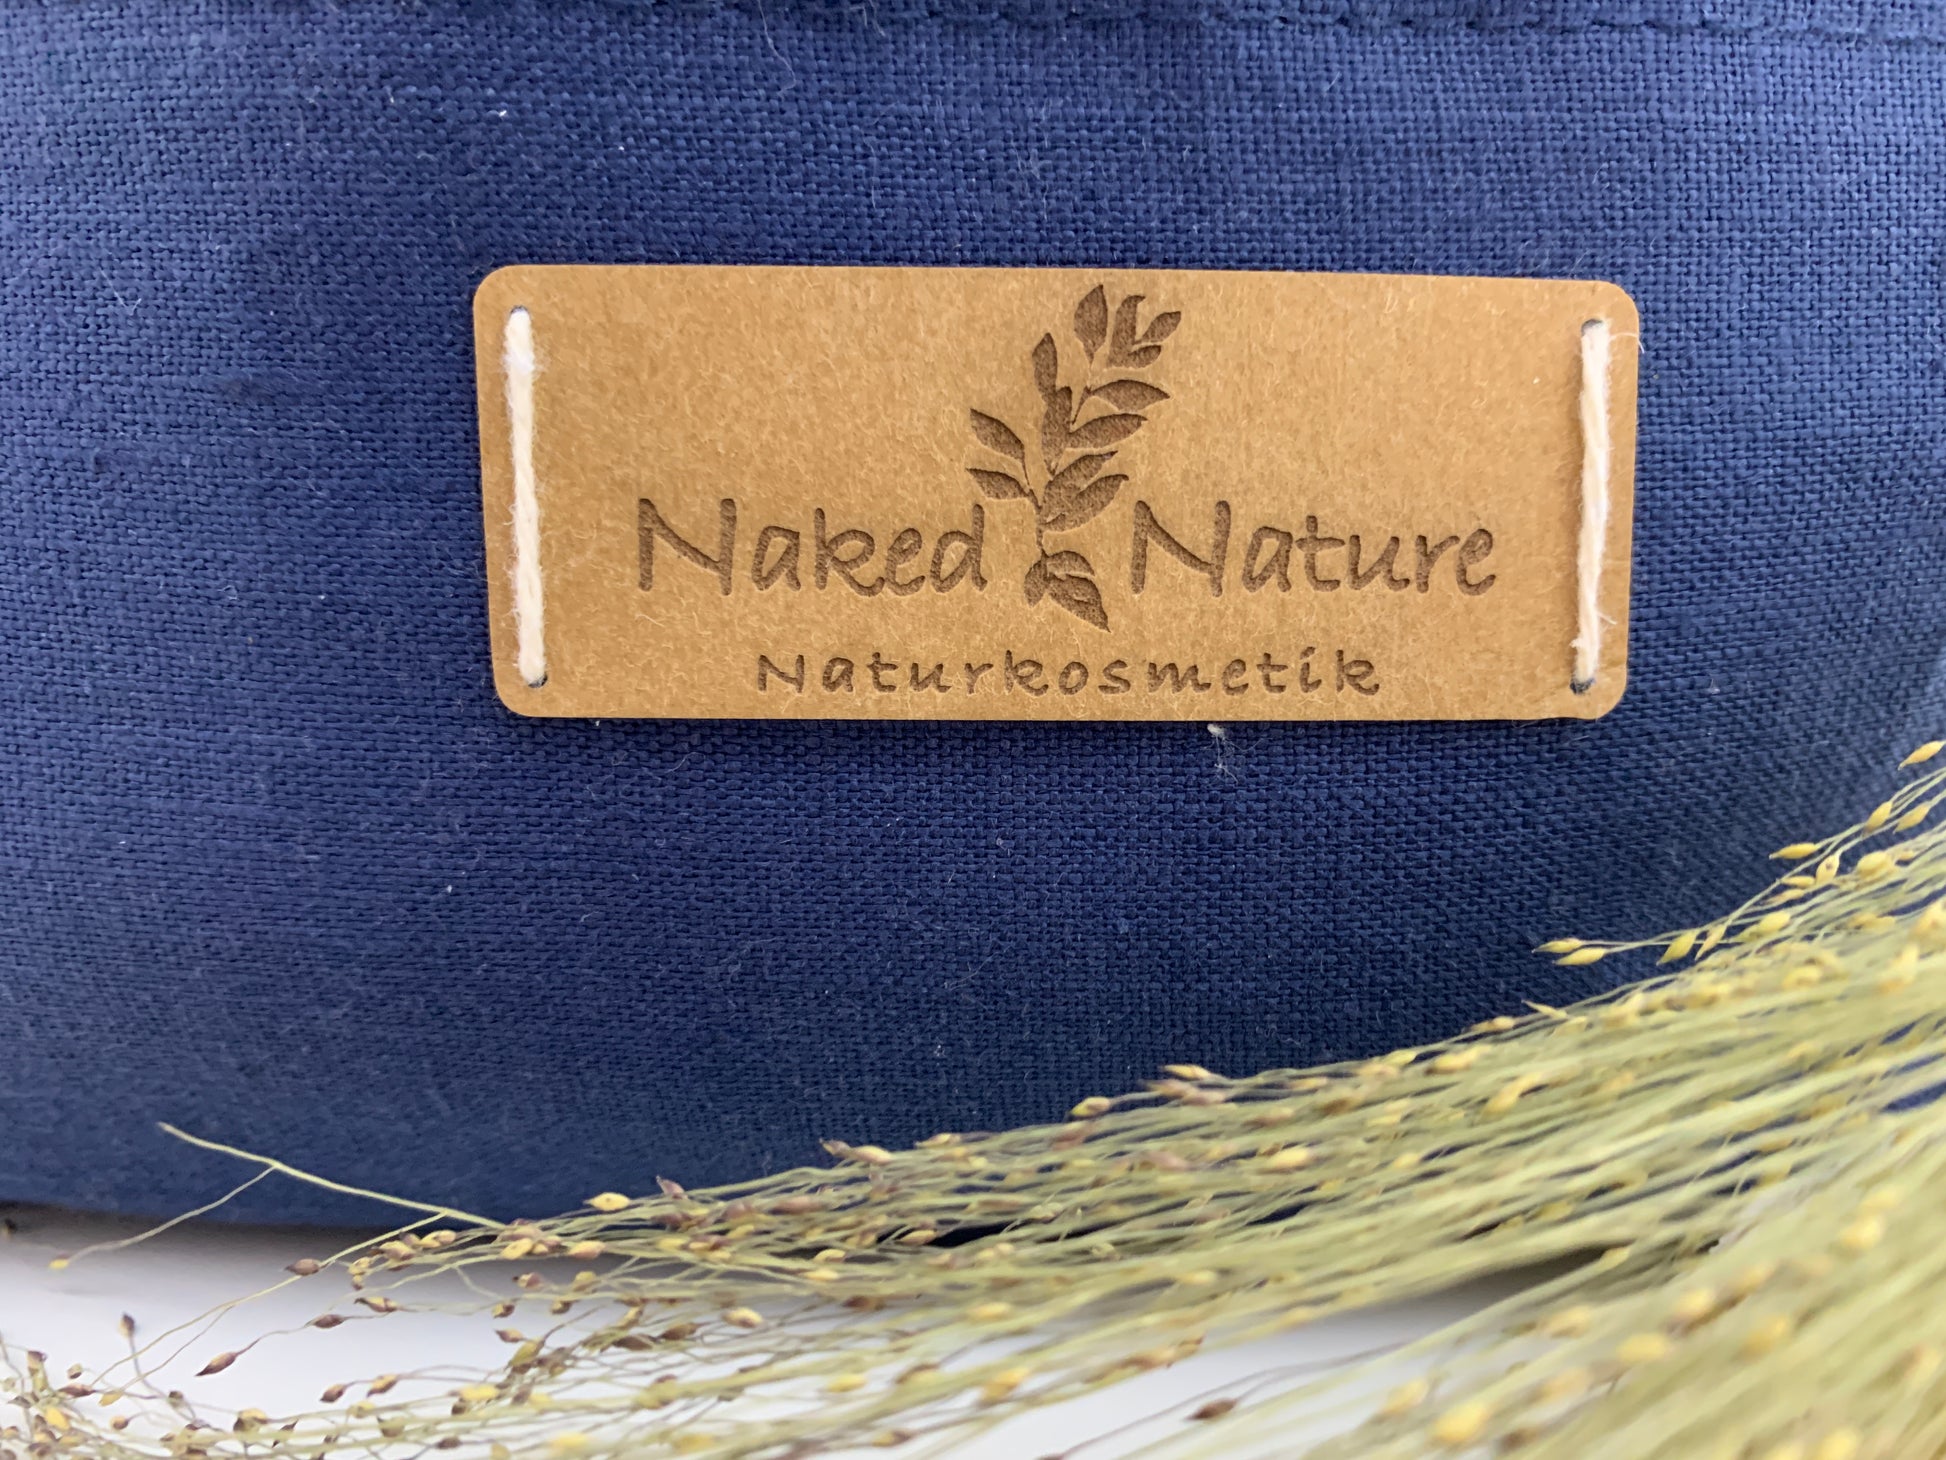 NakedNature Naturkosmetik